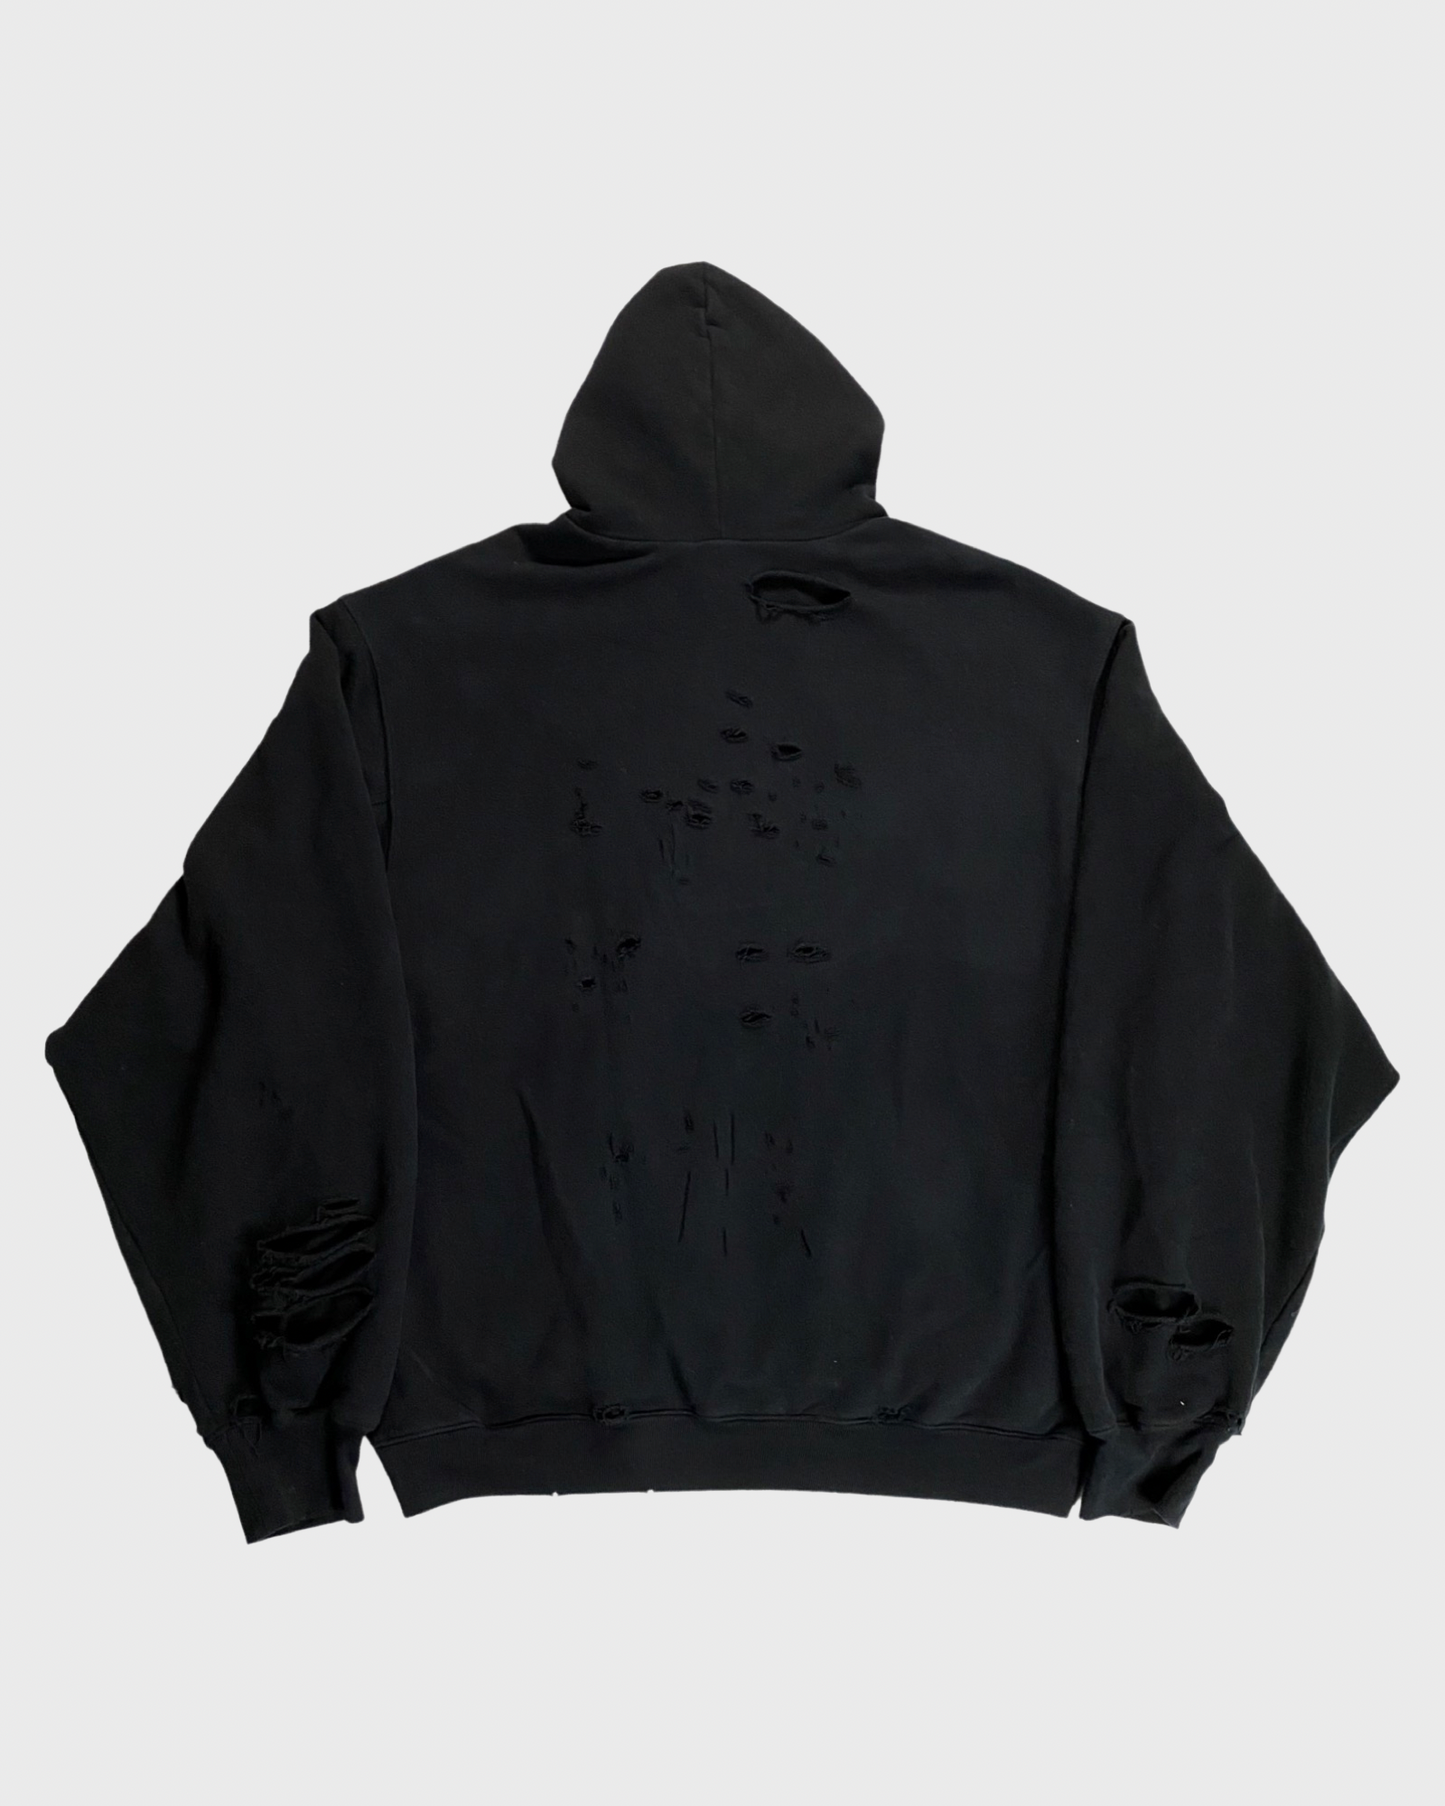 Balenciaga Destroyed logo hoodie in black Size:XXS